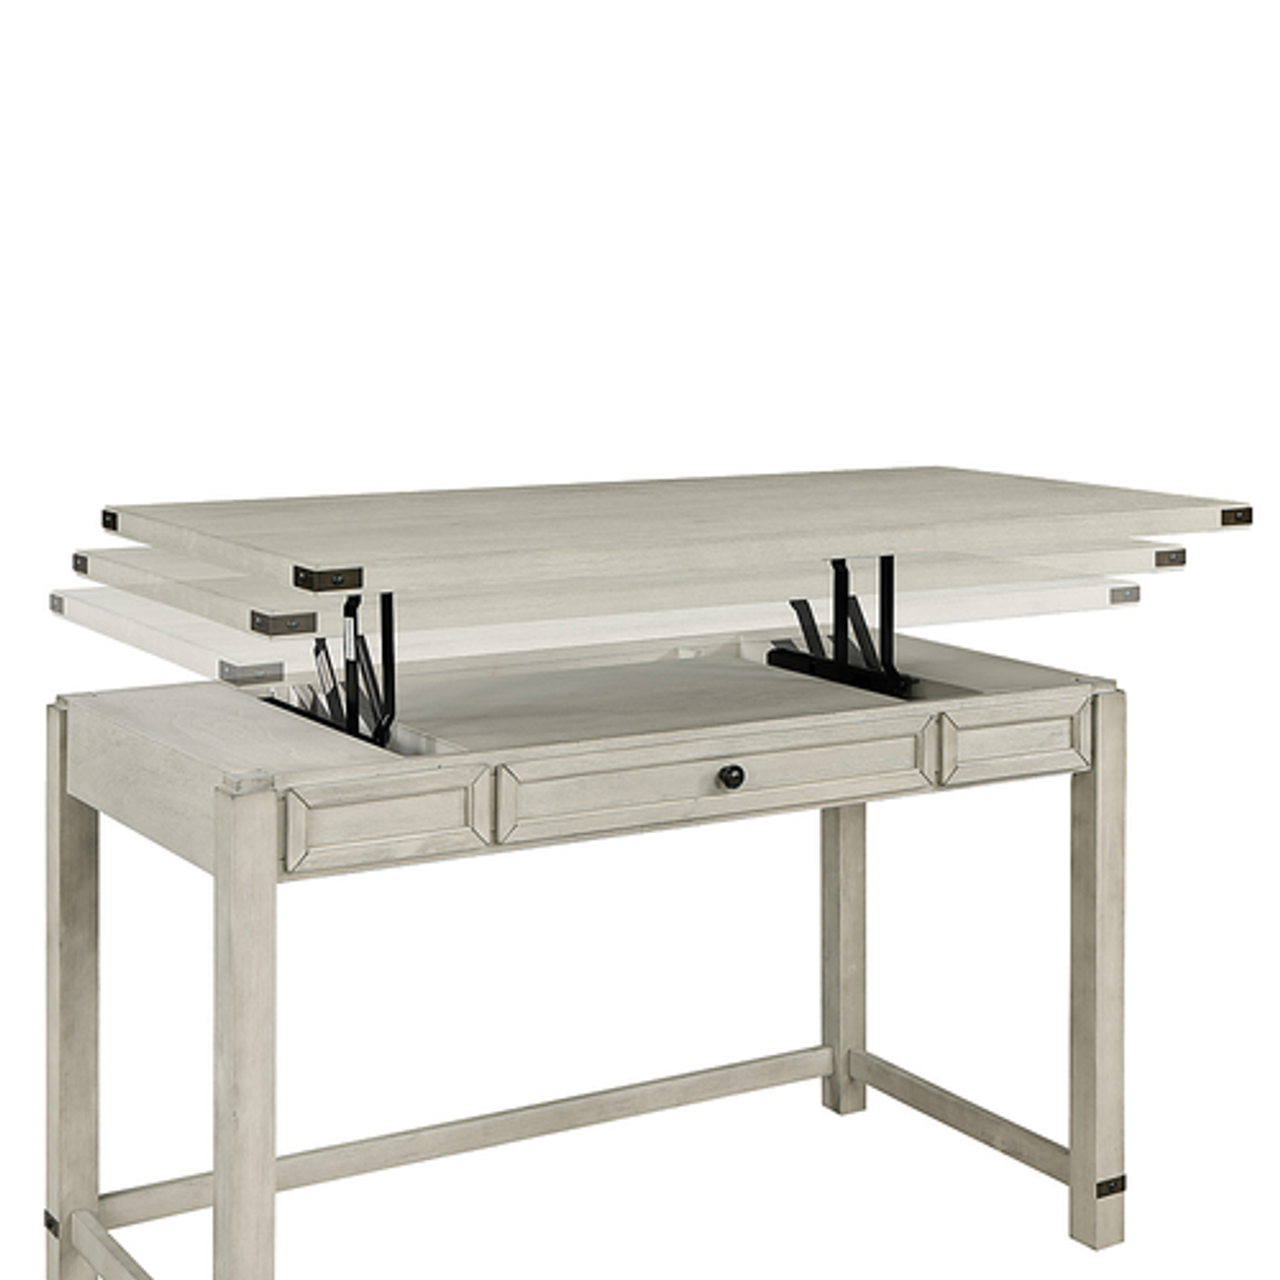 OSP Home Furnishings - Baton Rouge Lift Desk - Champagne Oak